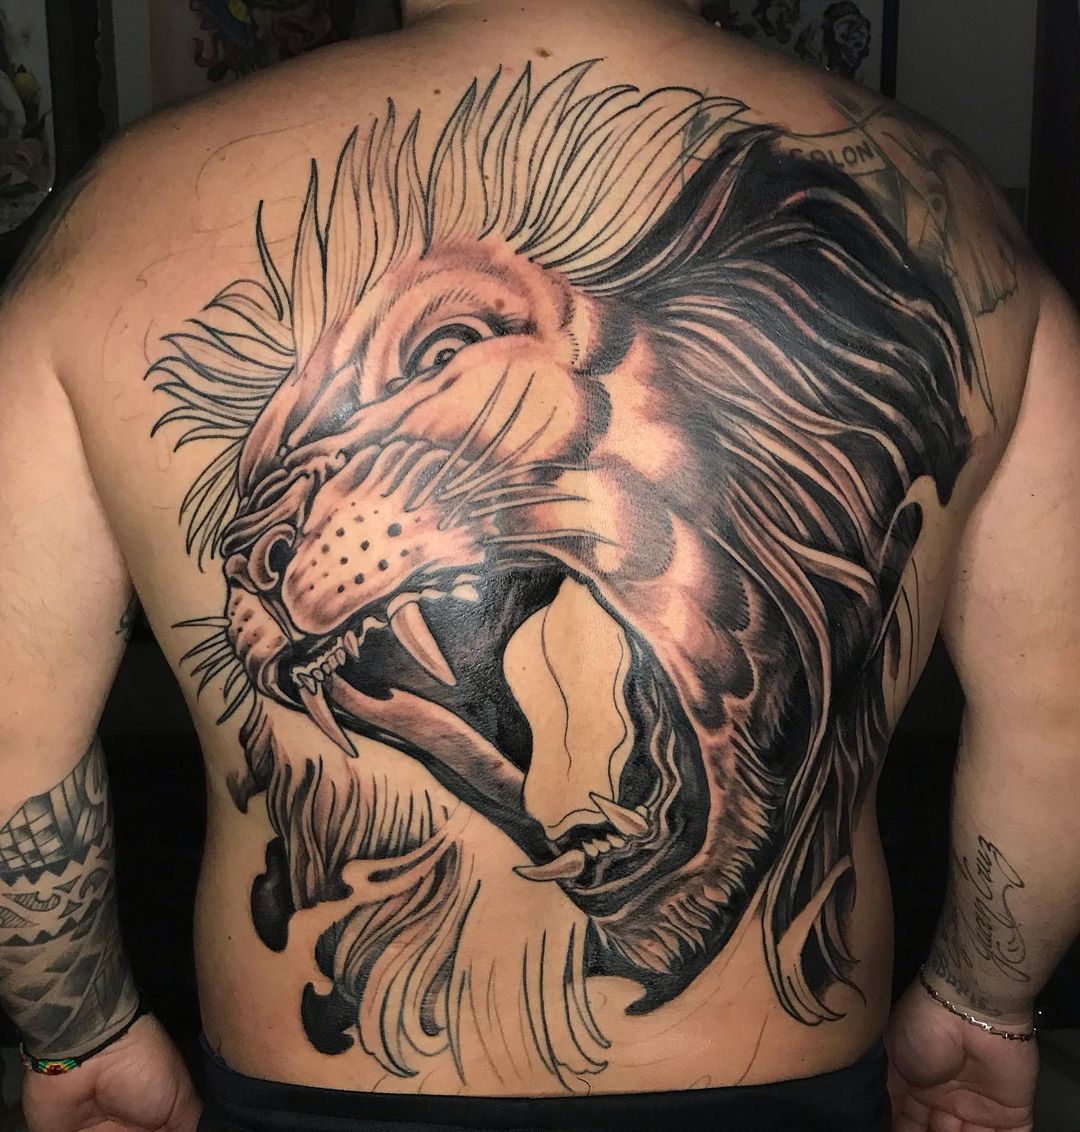 Big lion tattoo on back